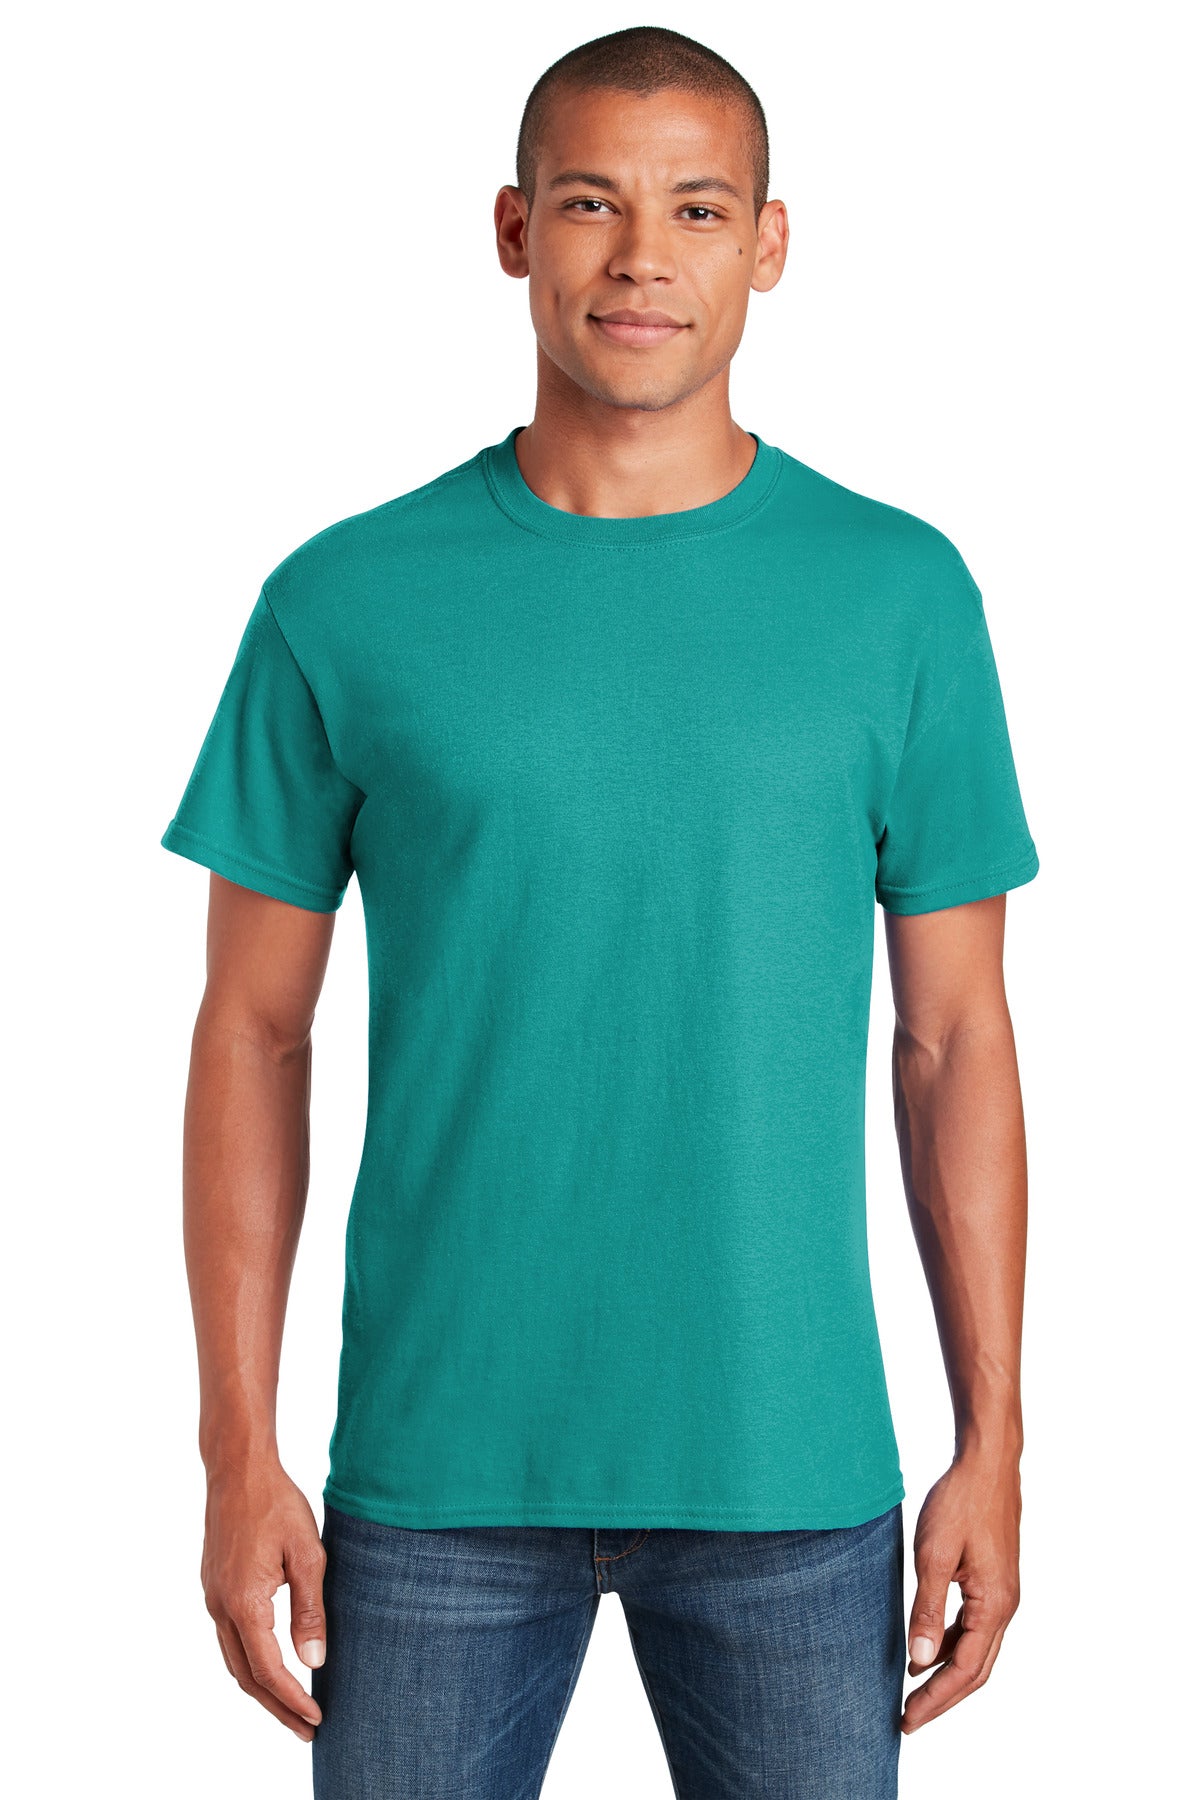 T-Shirts Jade Dome Gildan